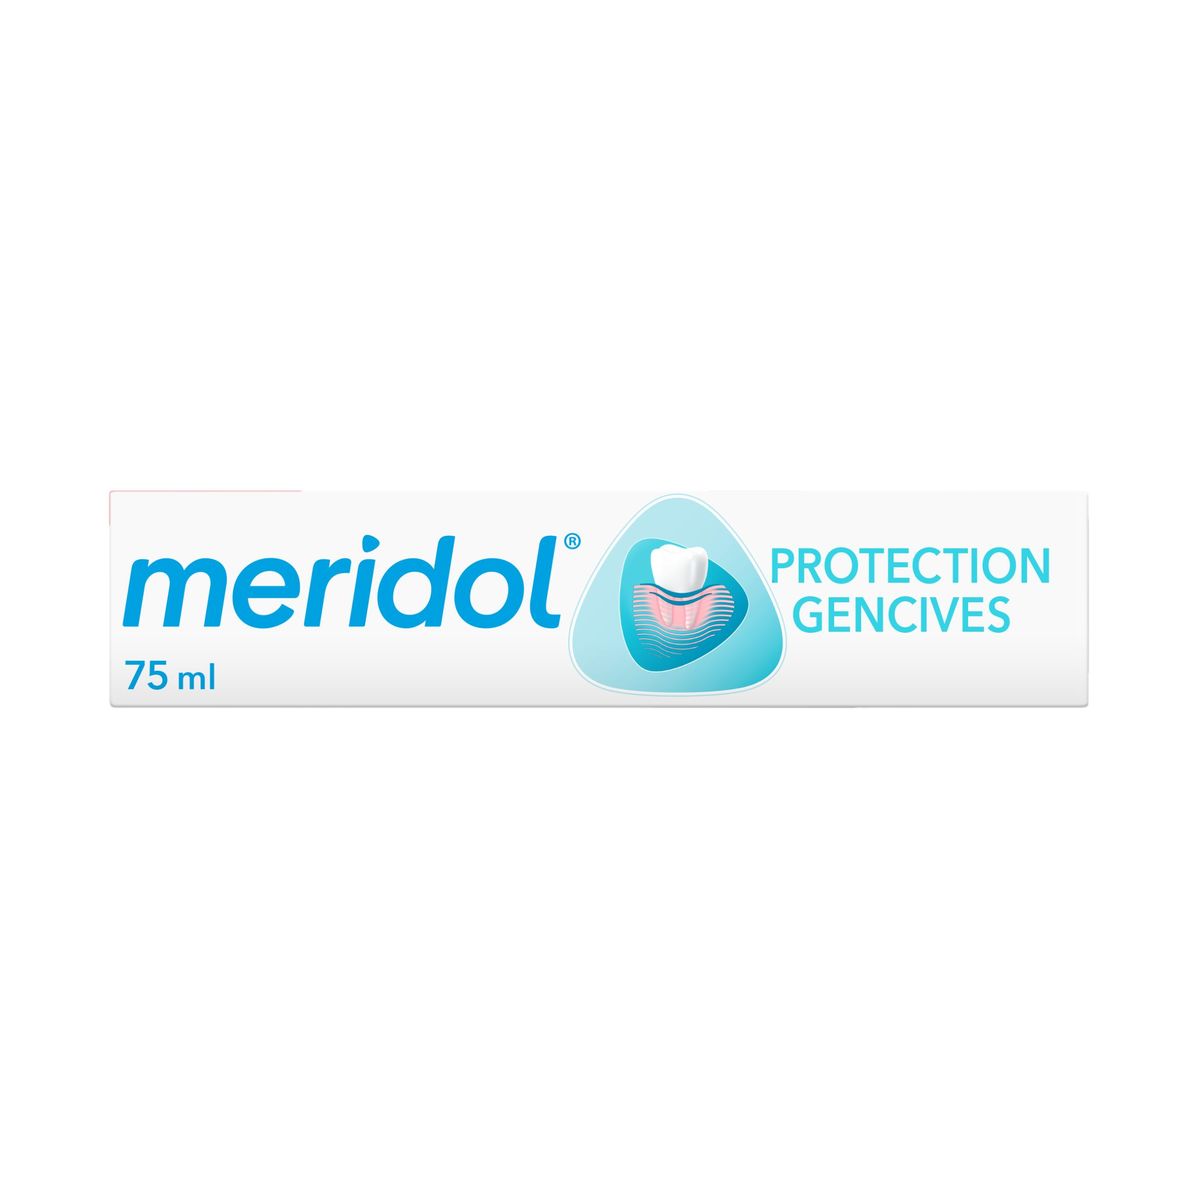 Dentifrice meridol Protection Gencives - 75ml